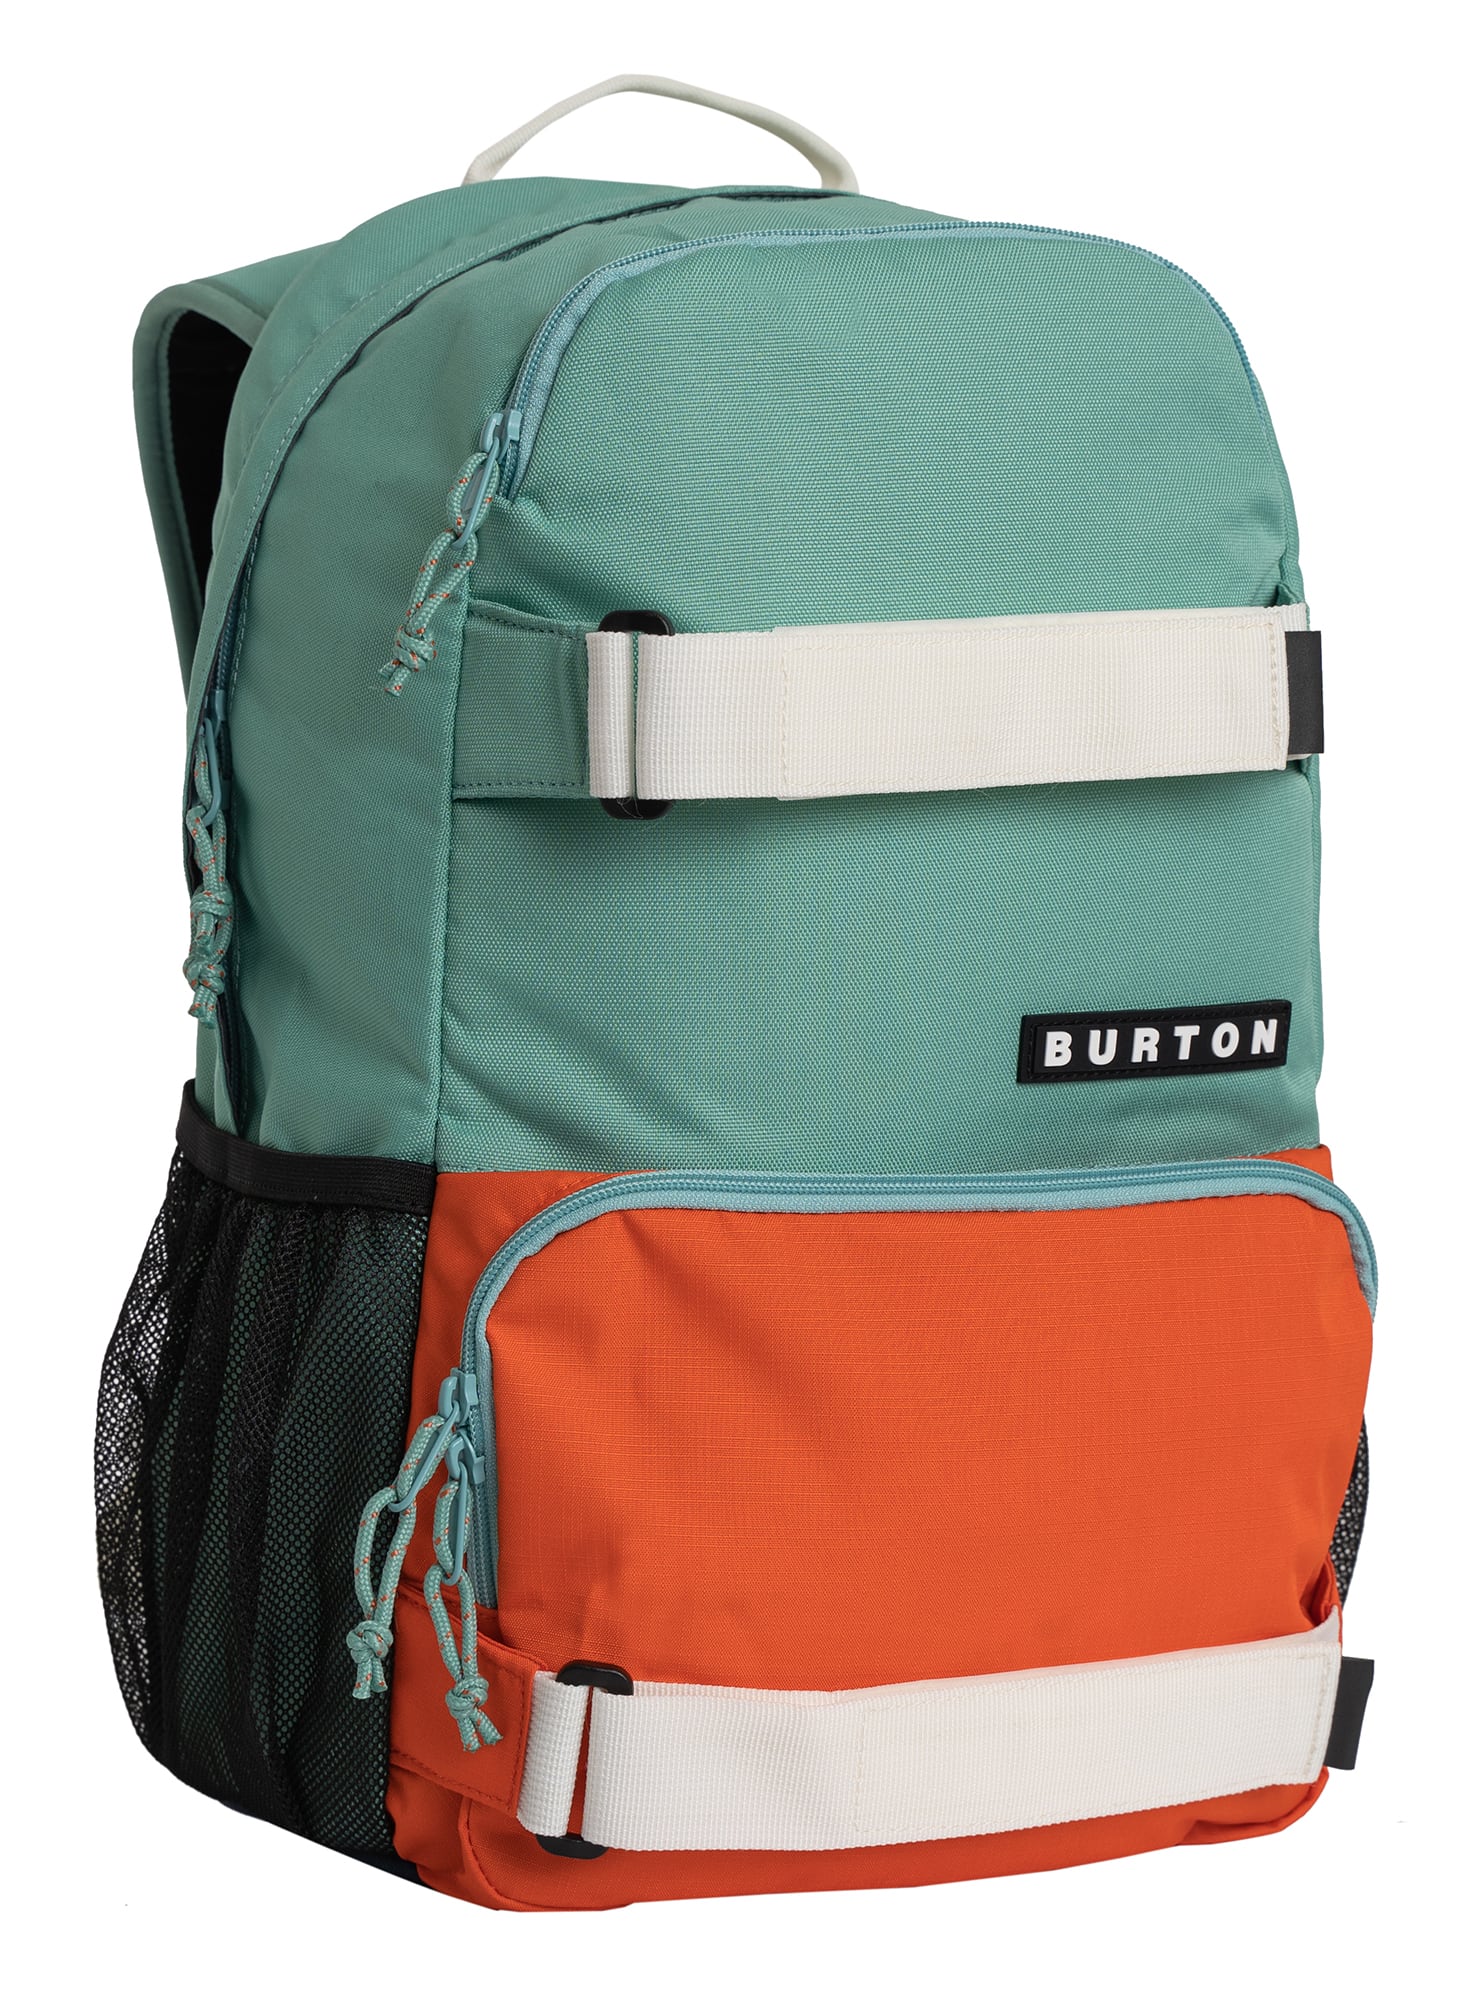 Burton Treble Yell 21L Backpack | Burton.com Spring 2020 JP